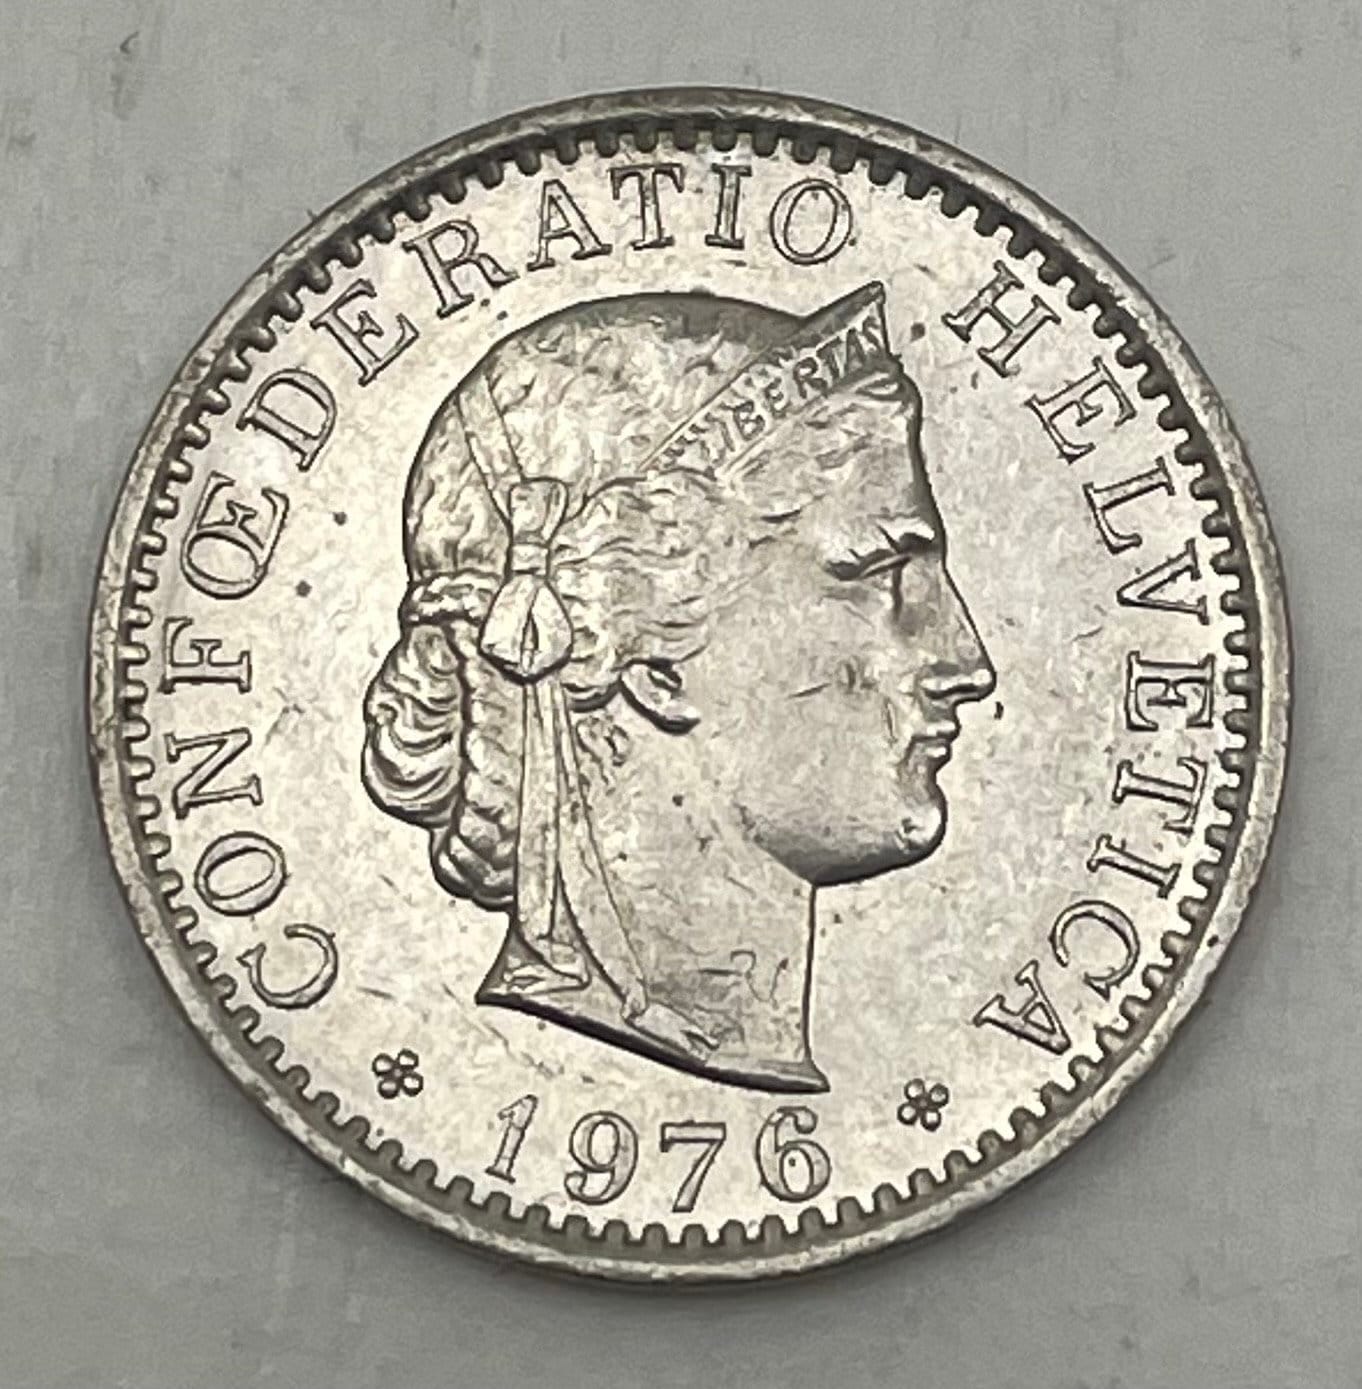 20 rappen , Switzerland - Coin value - bitcoinhelp.fun